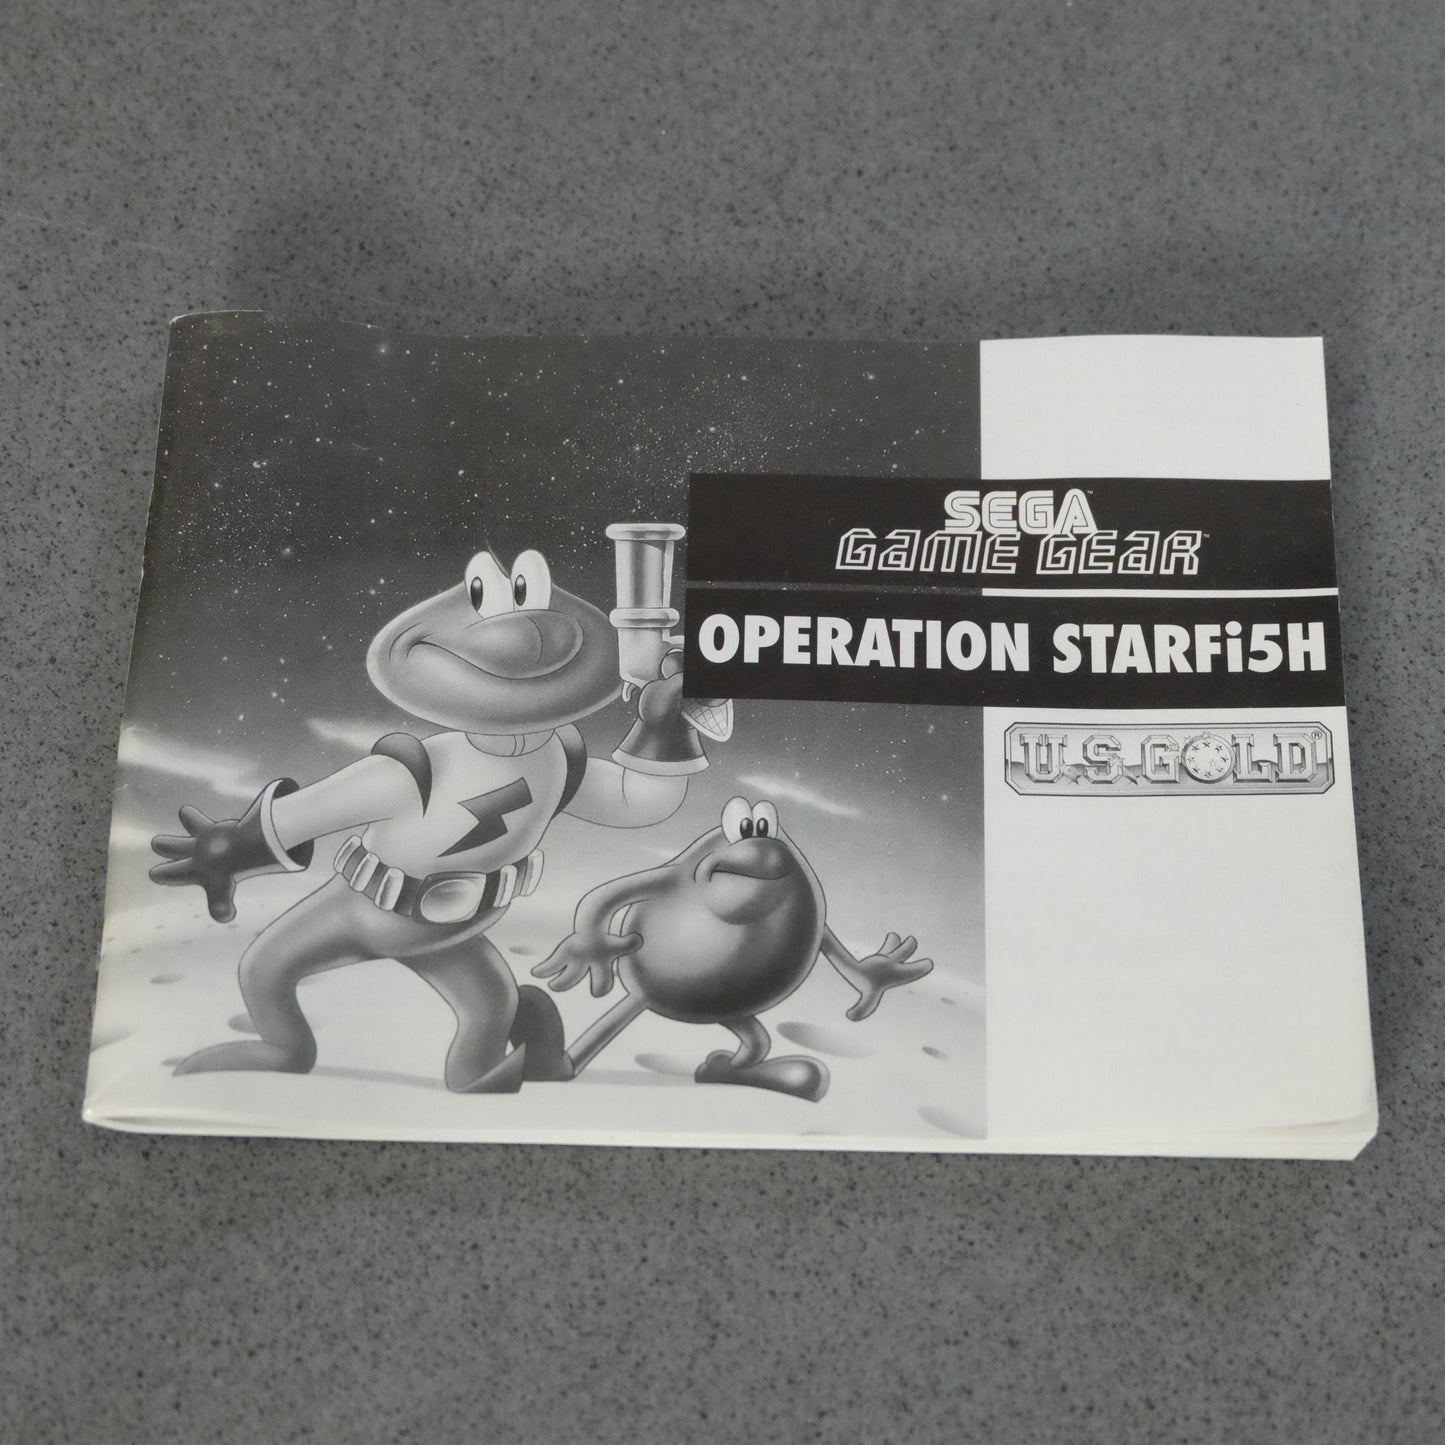 Operation Starfish